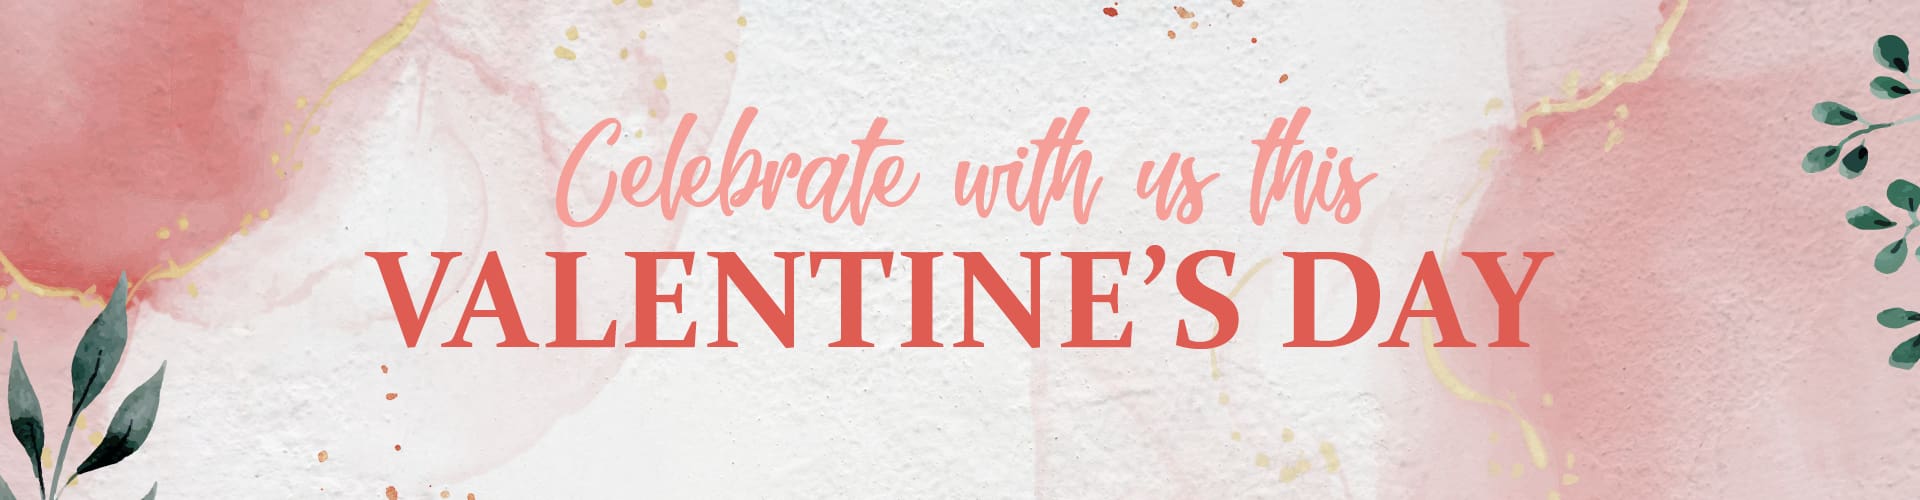 Celebrate Valentine's Day at a Classic Inns pub near you